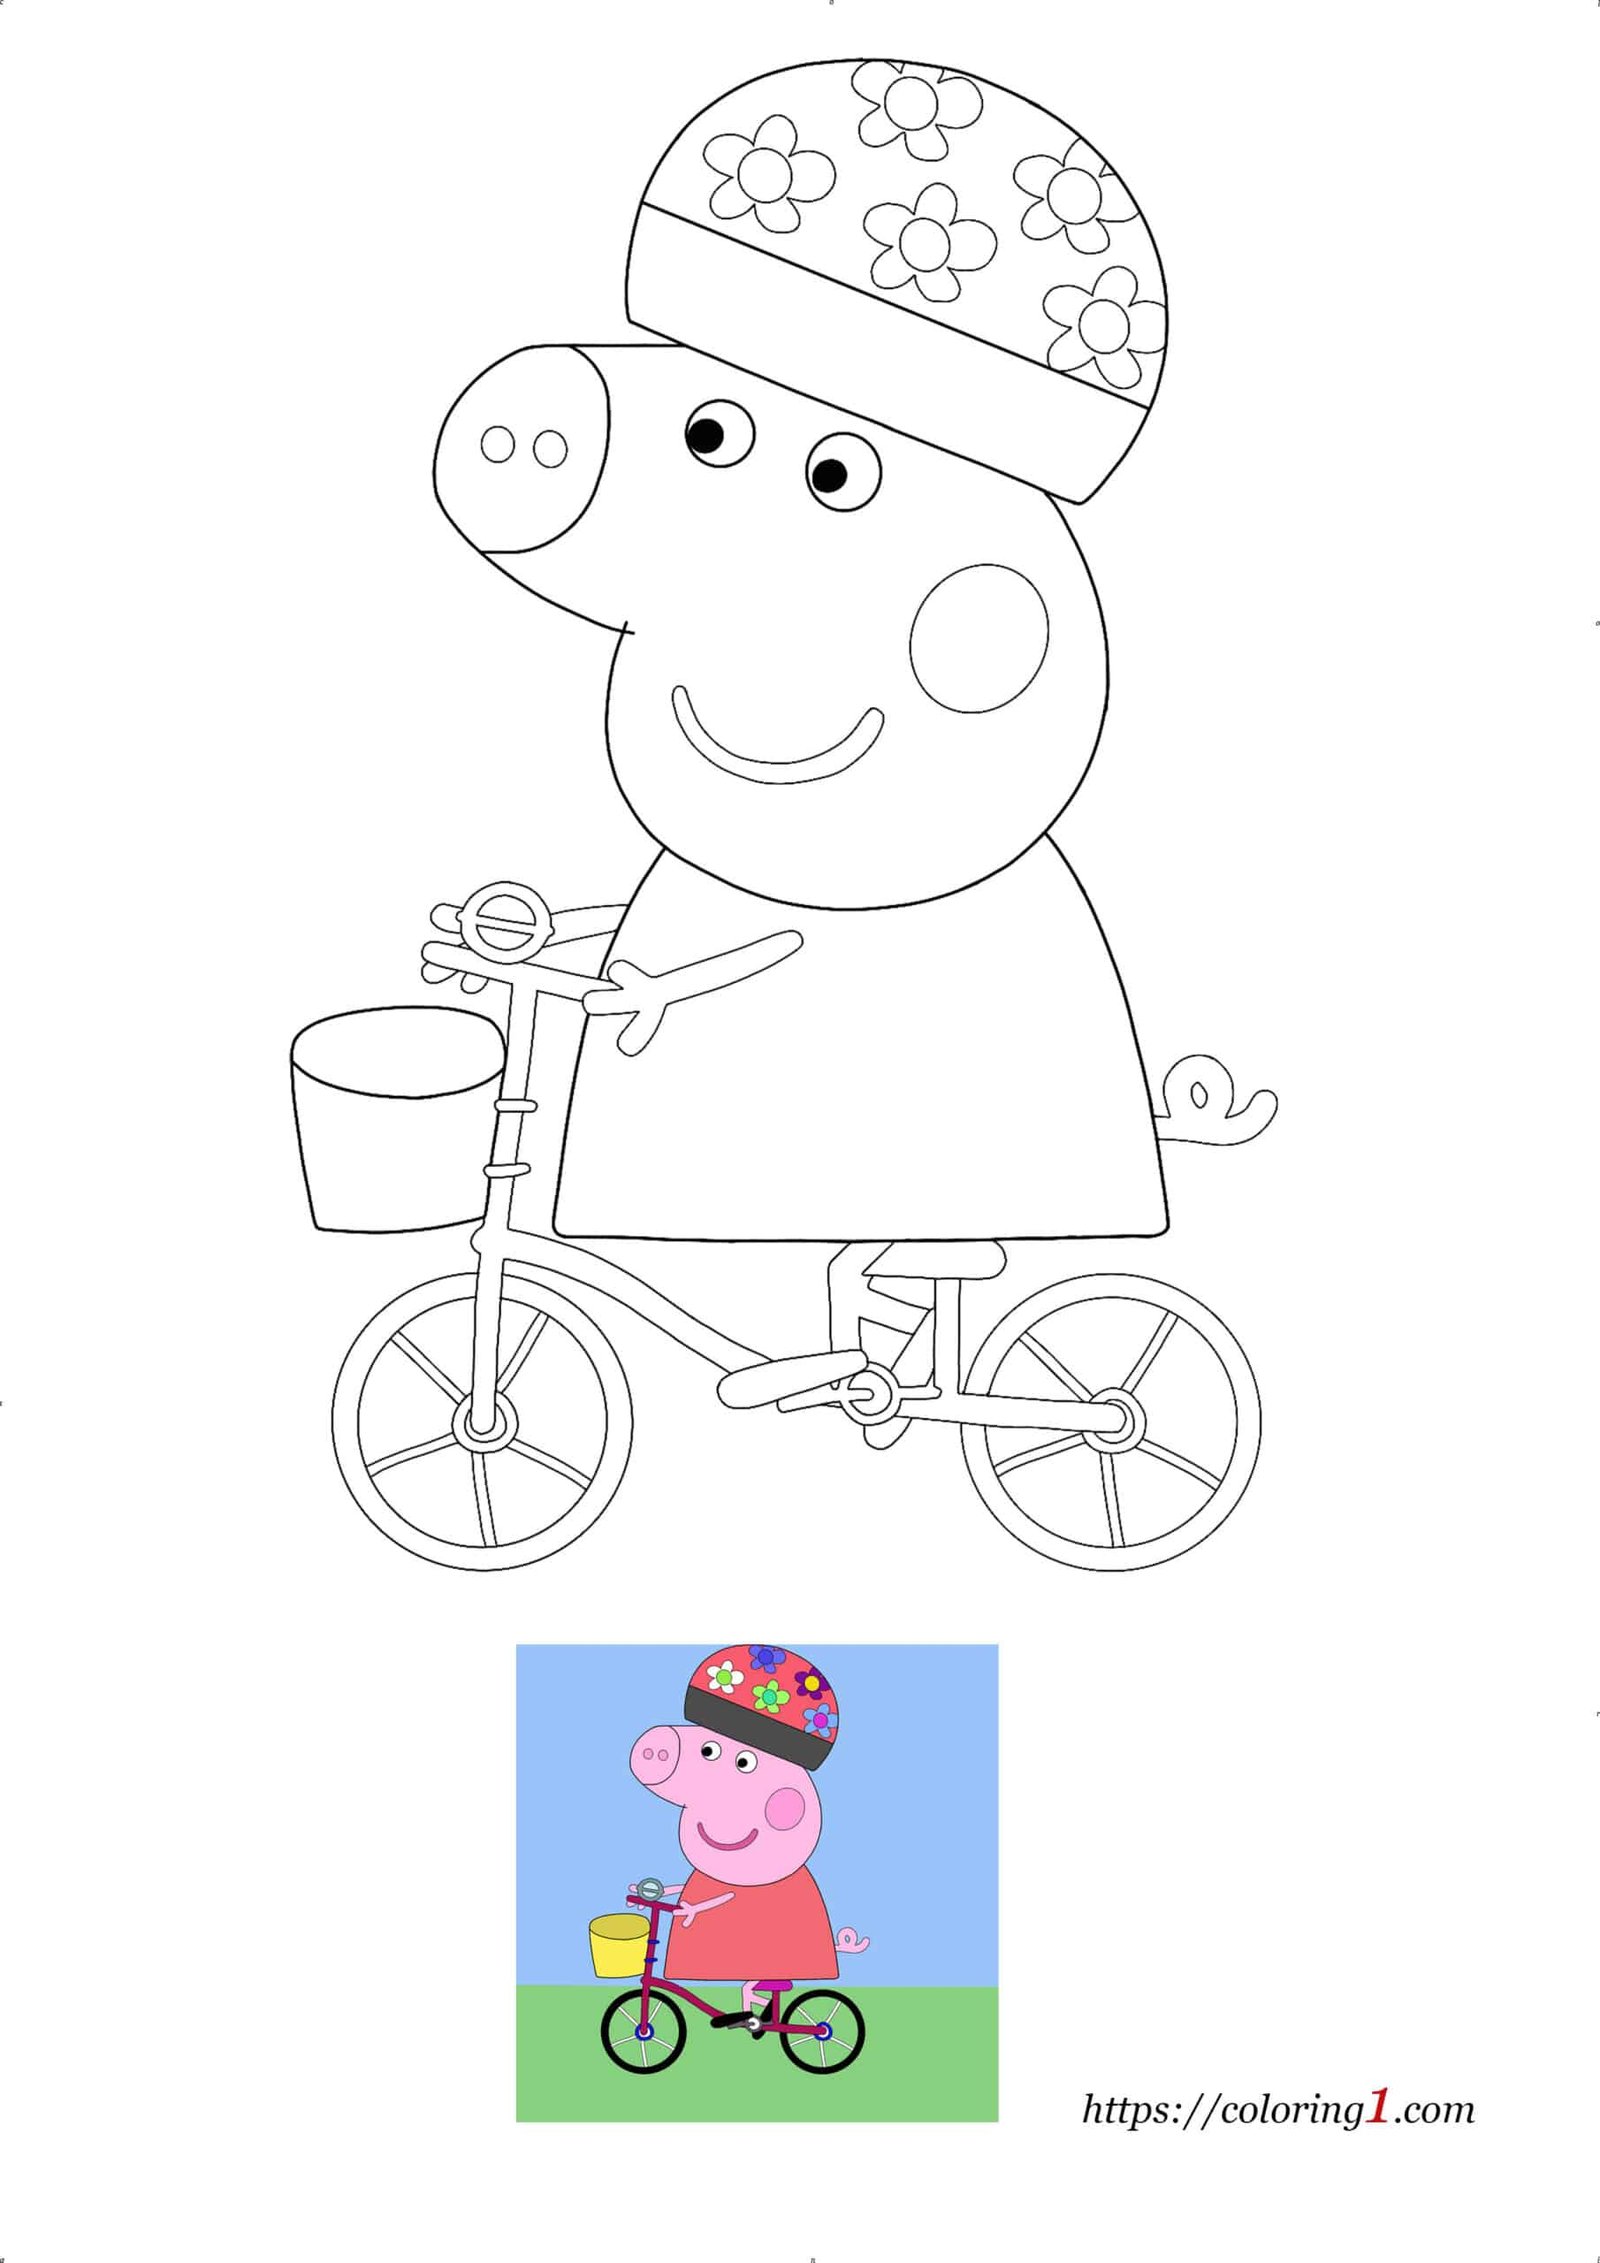 Peppa Pig Bike coloring page to print pdf